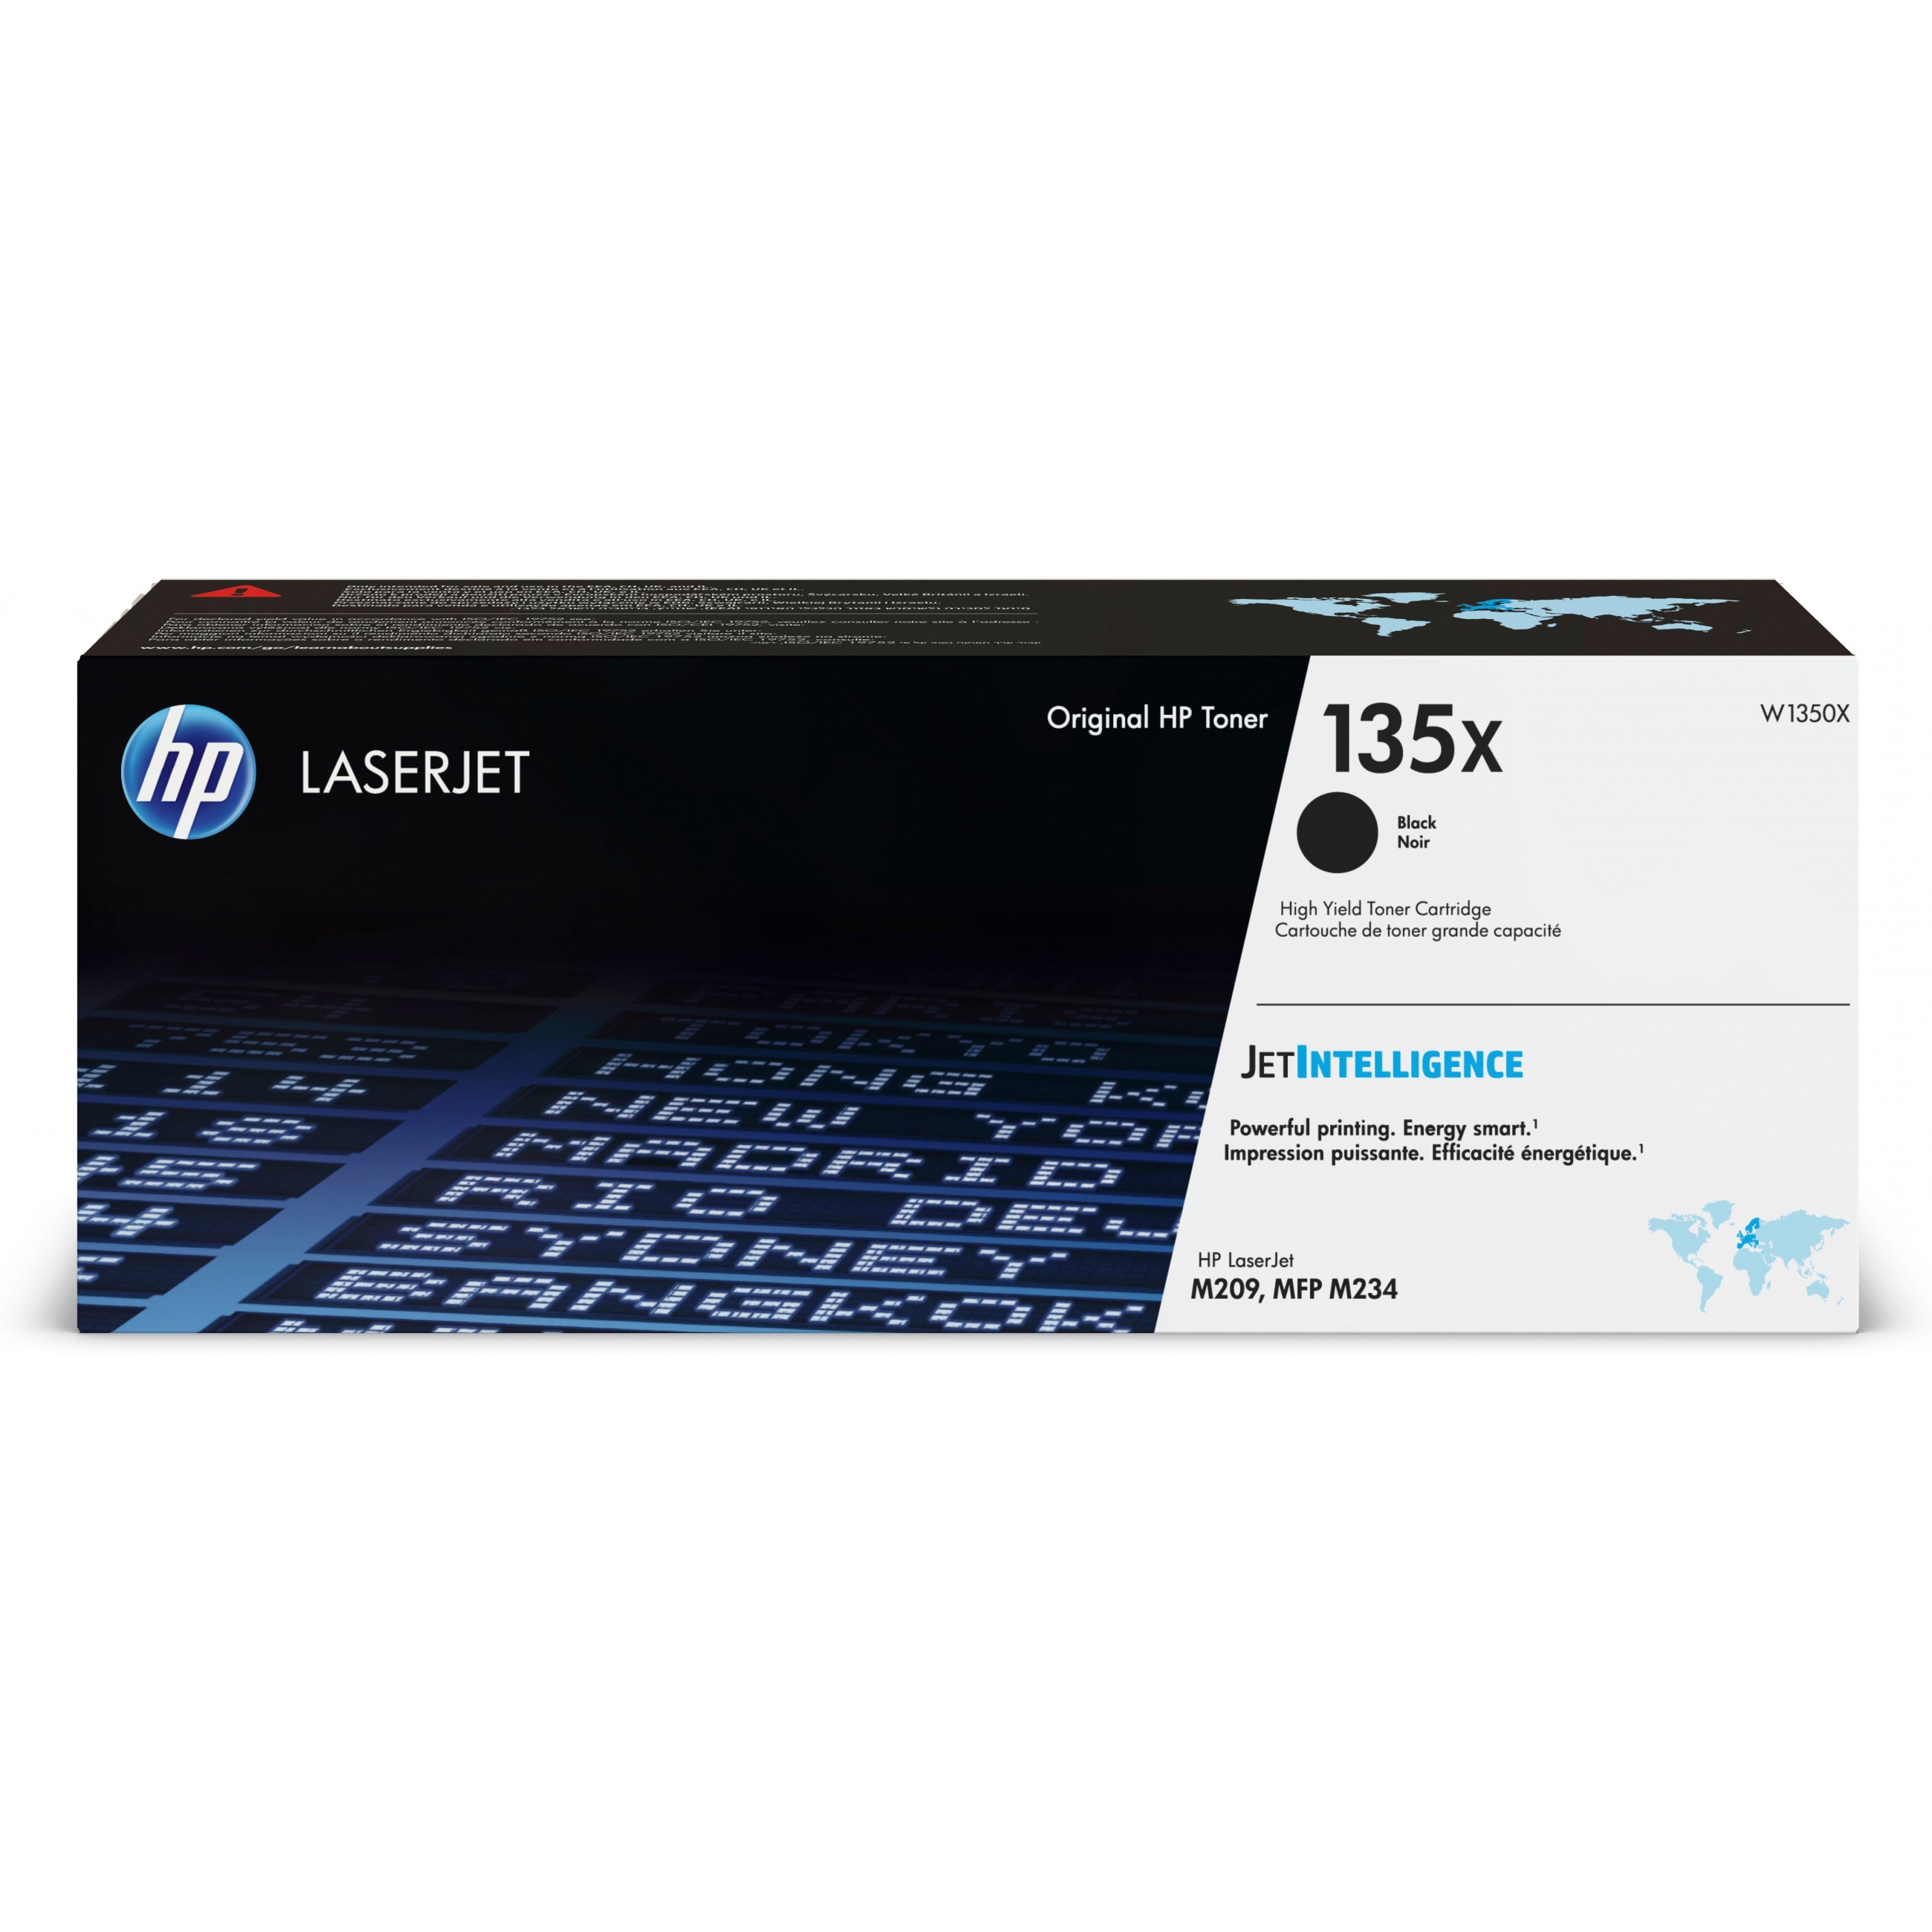 HP LaserJet 135X High Yield Black Original toner cartridge - W1350X